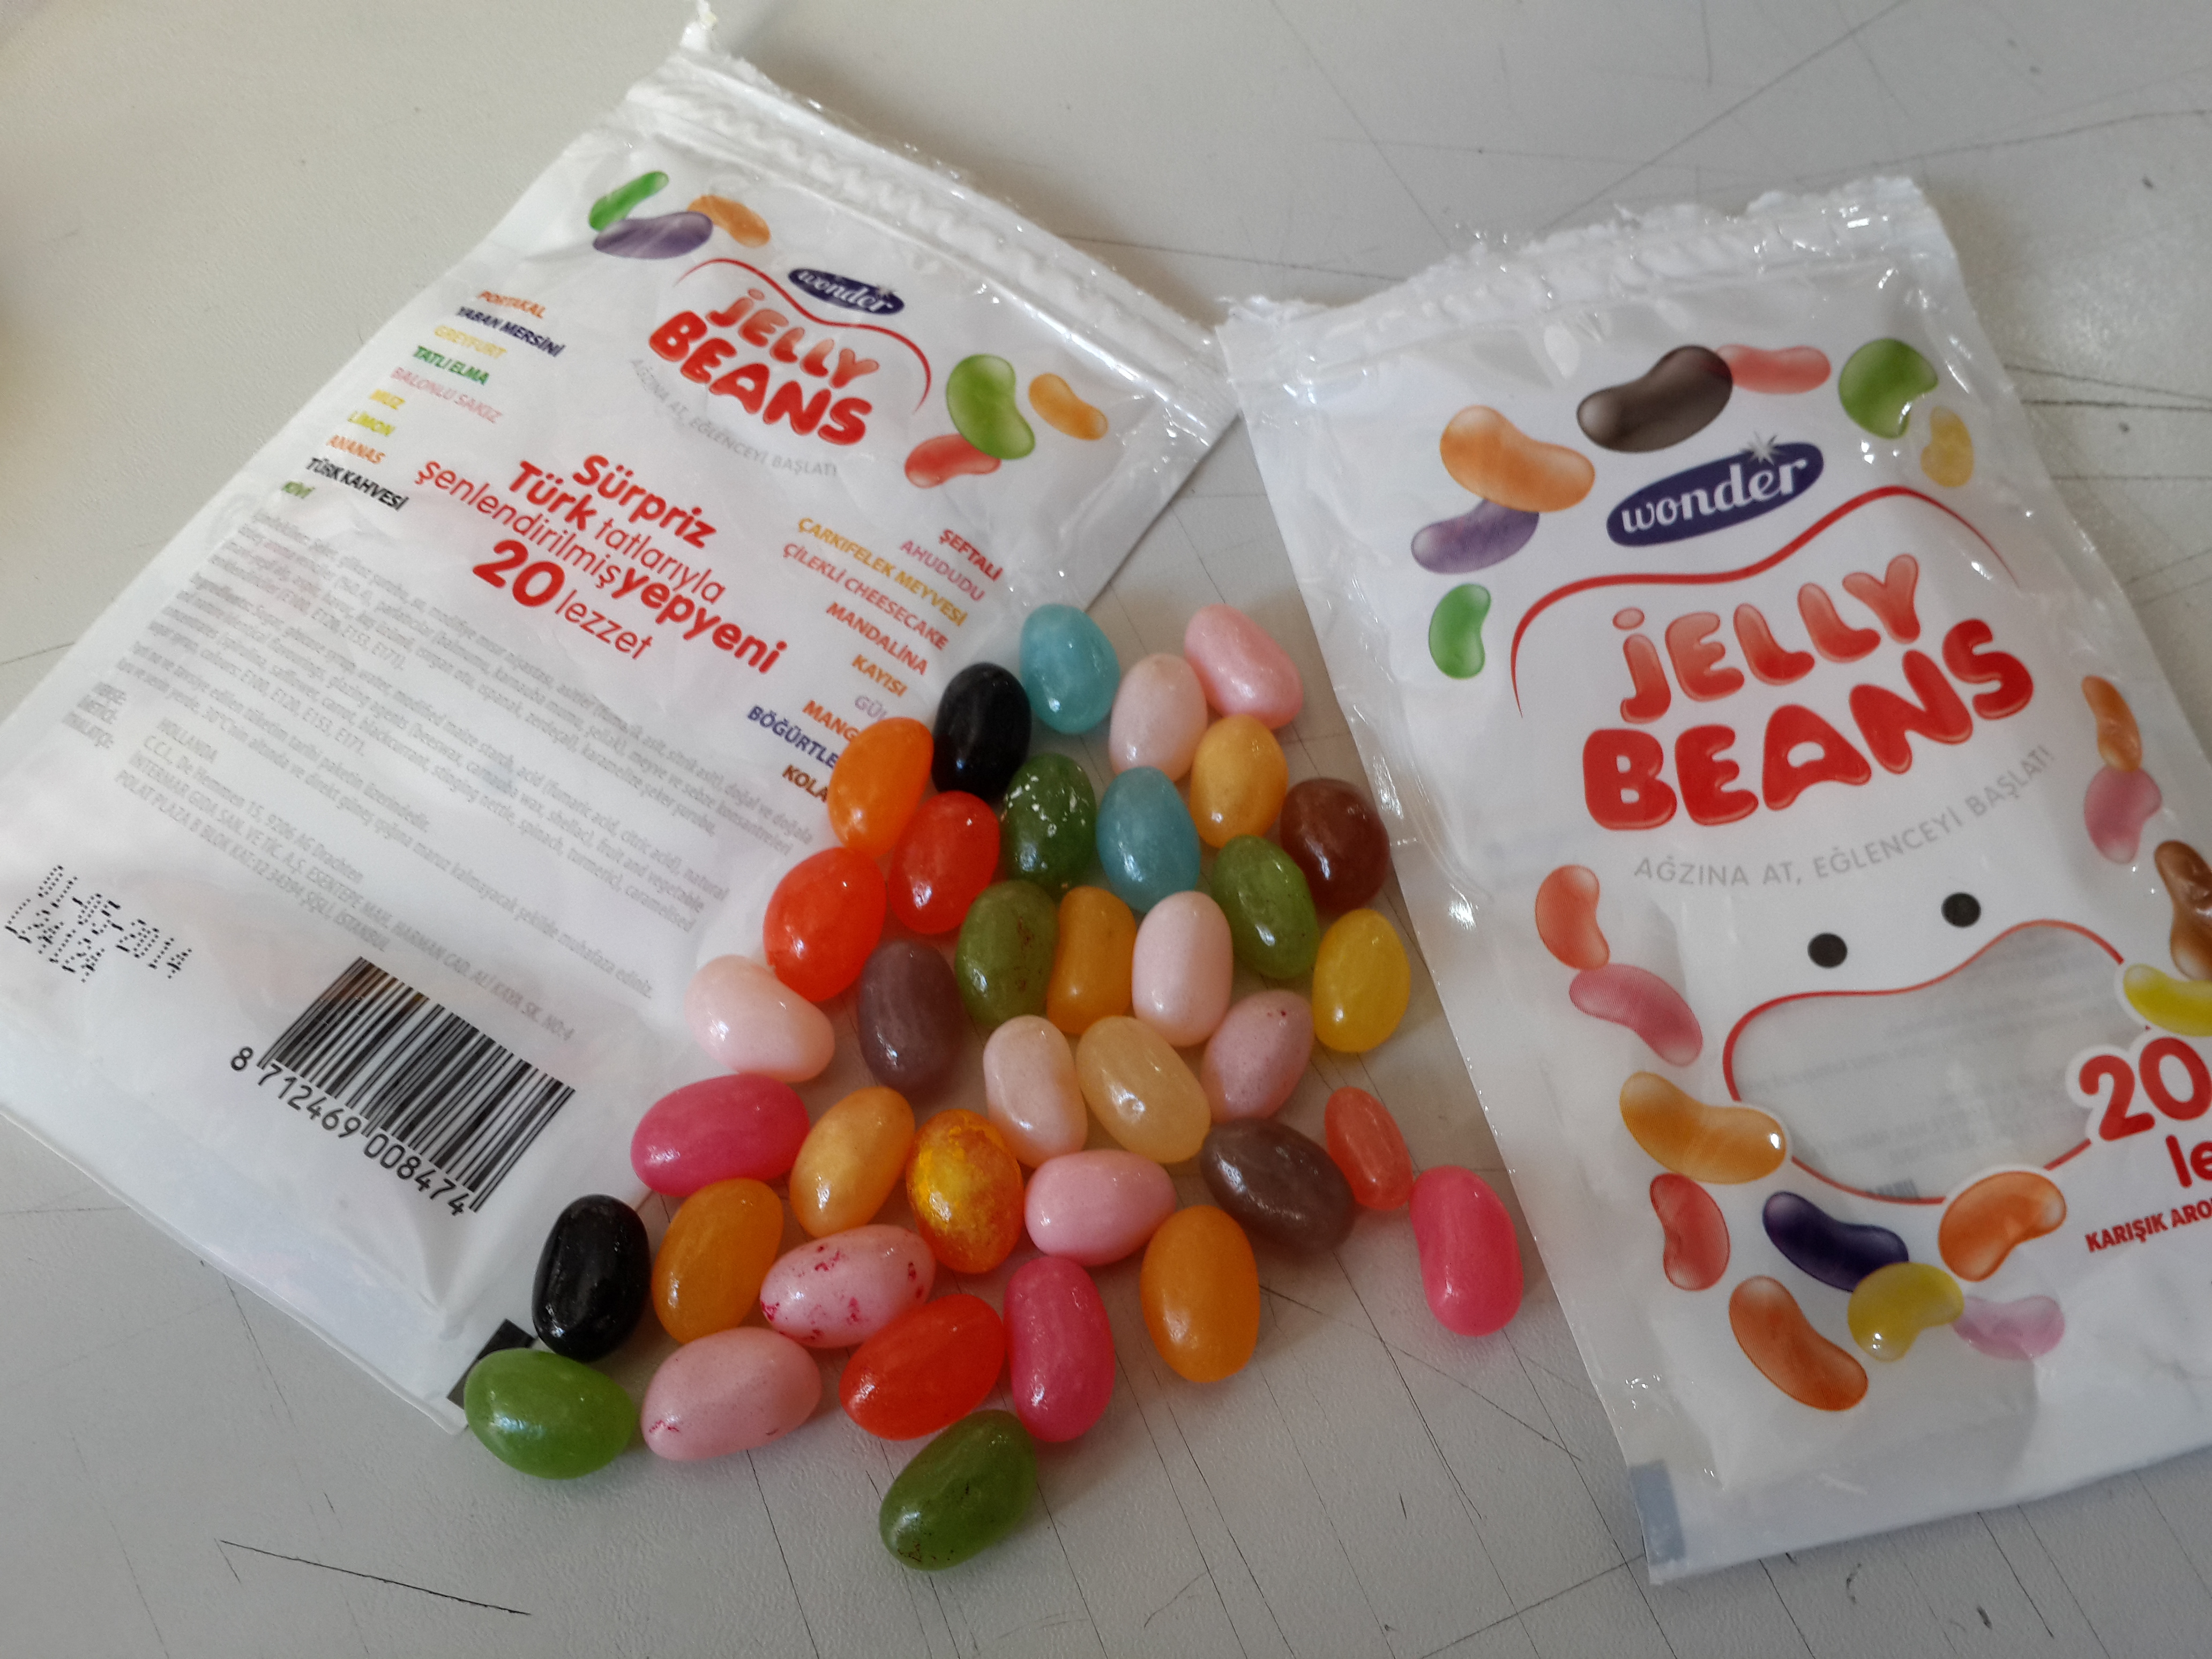 Jellybean brains. Jelly Bean Brains девушка. Jelly Bean Brains. Jelly Bean Brains кто это.